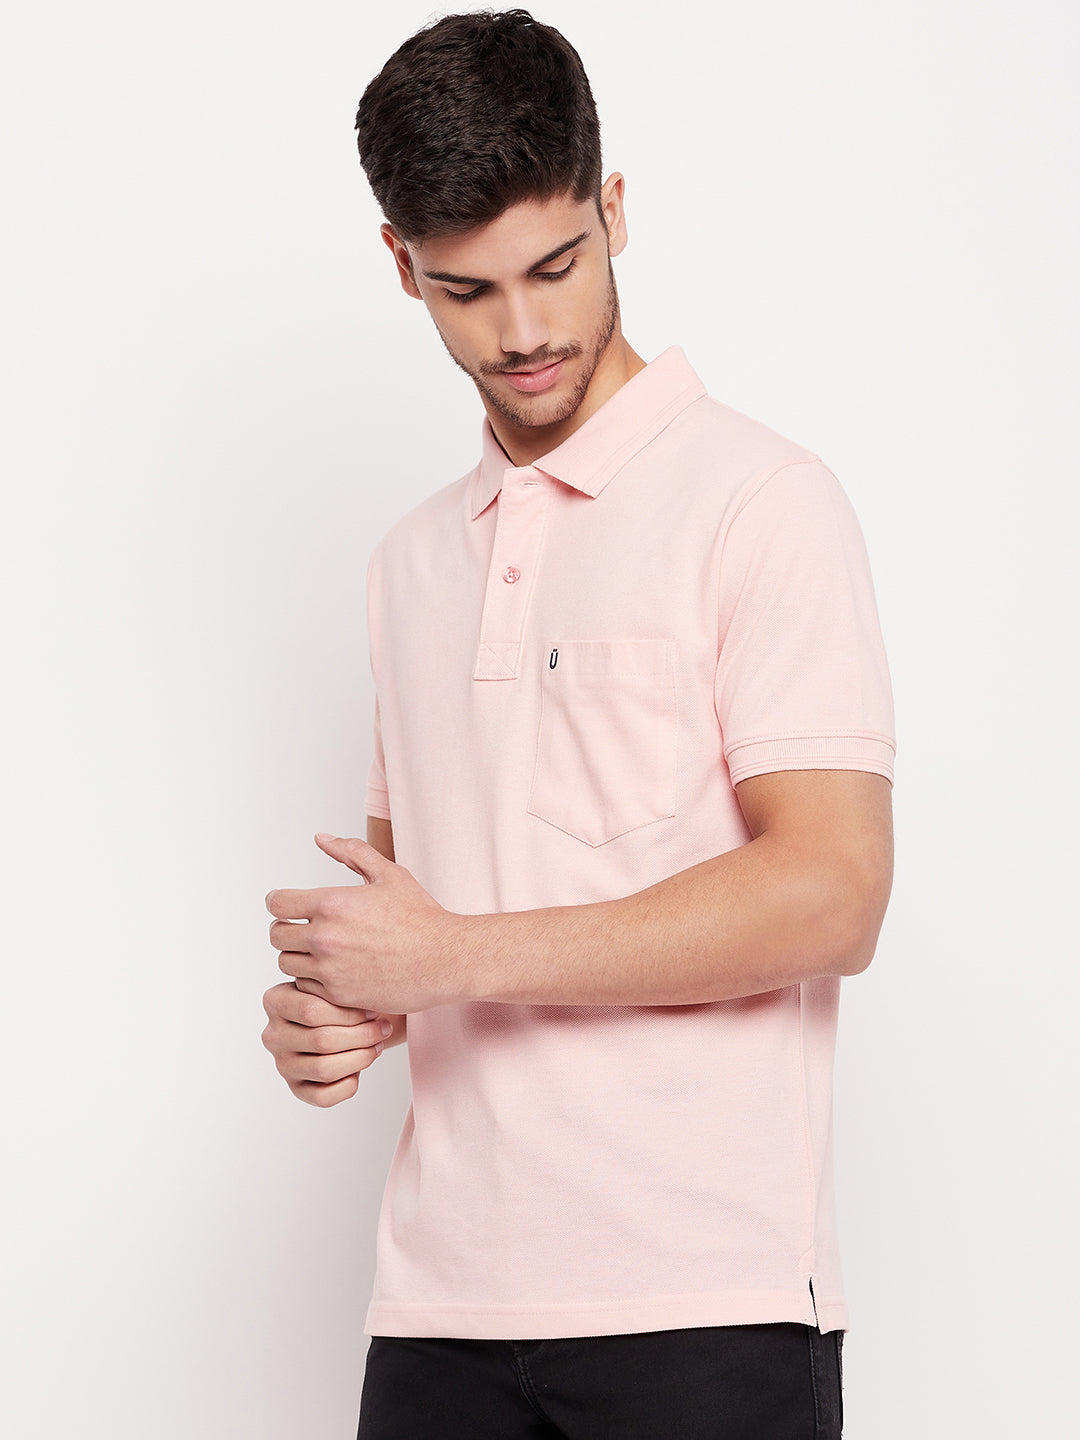 Soft pink polo shirt